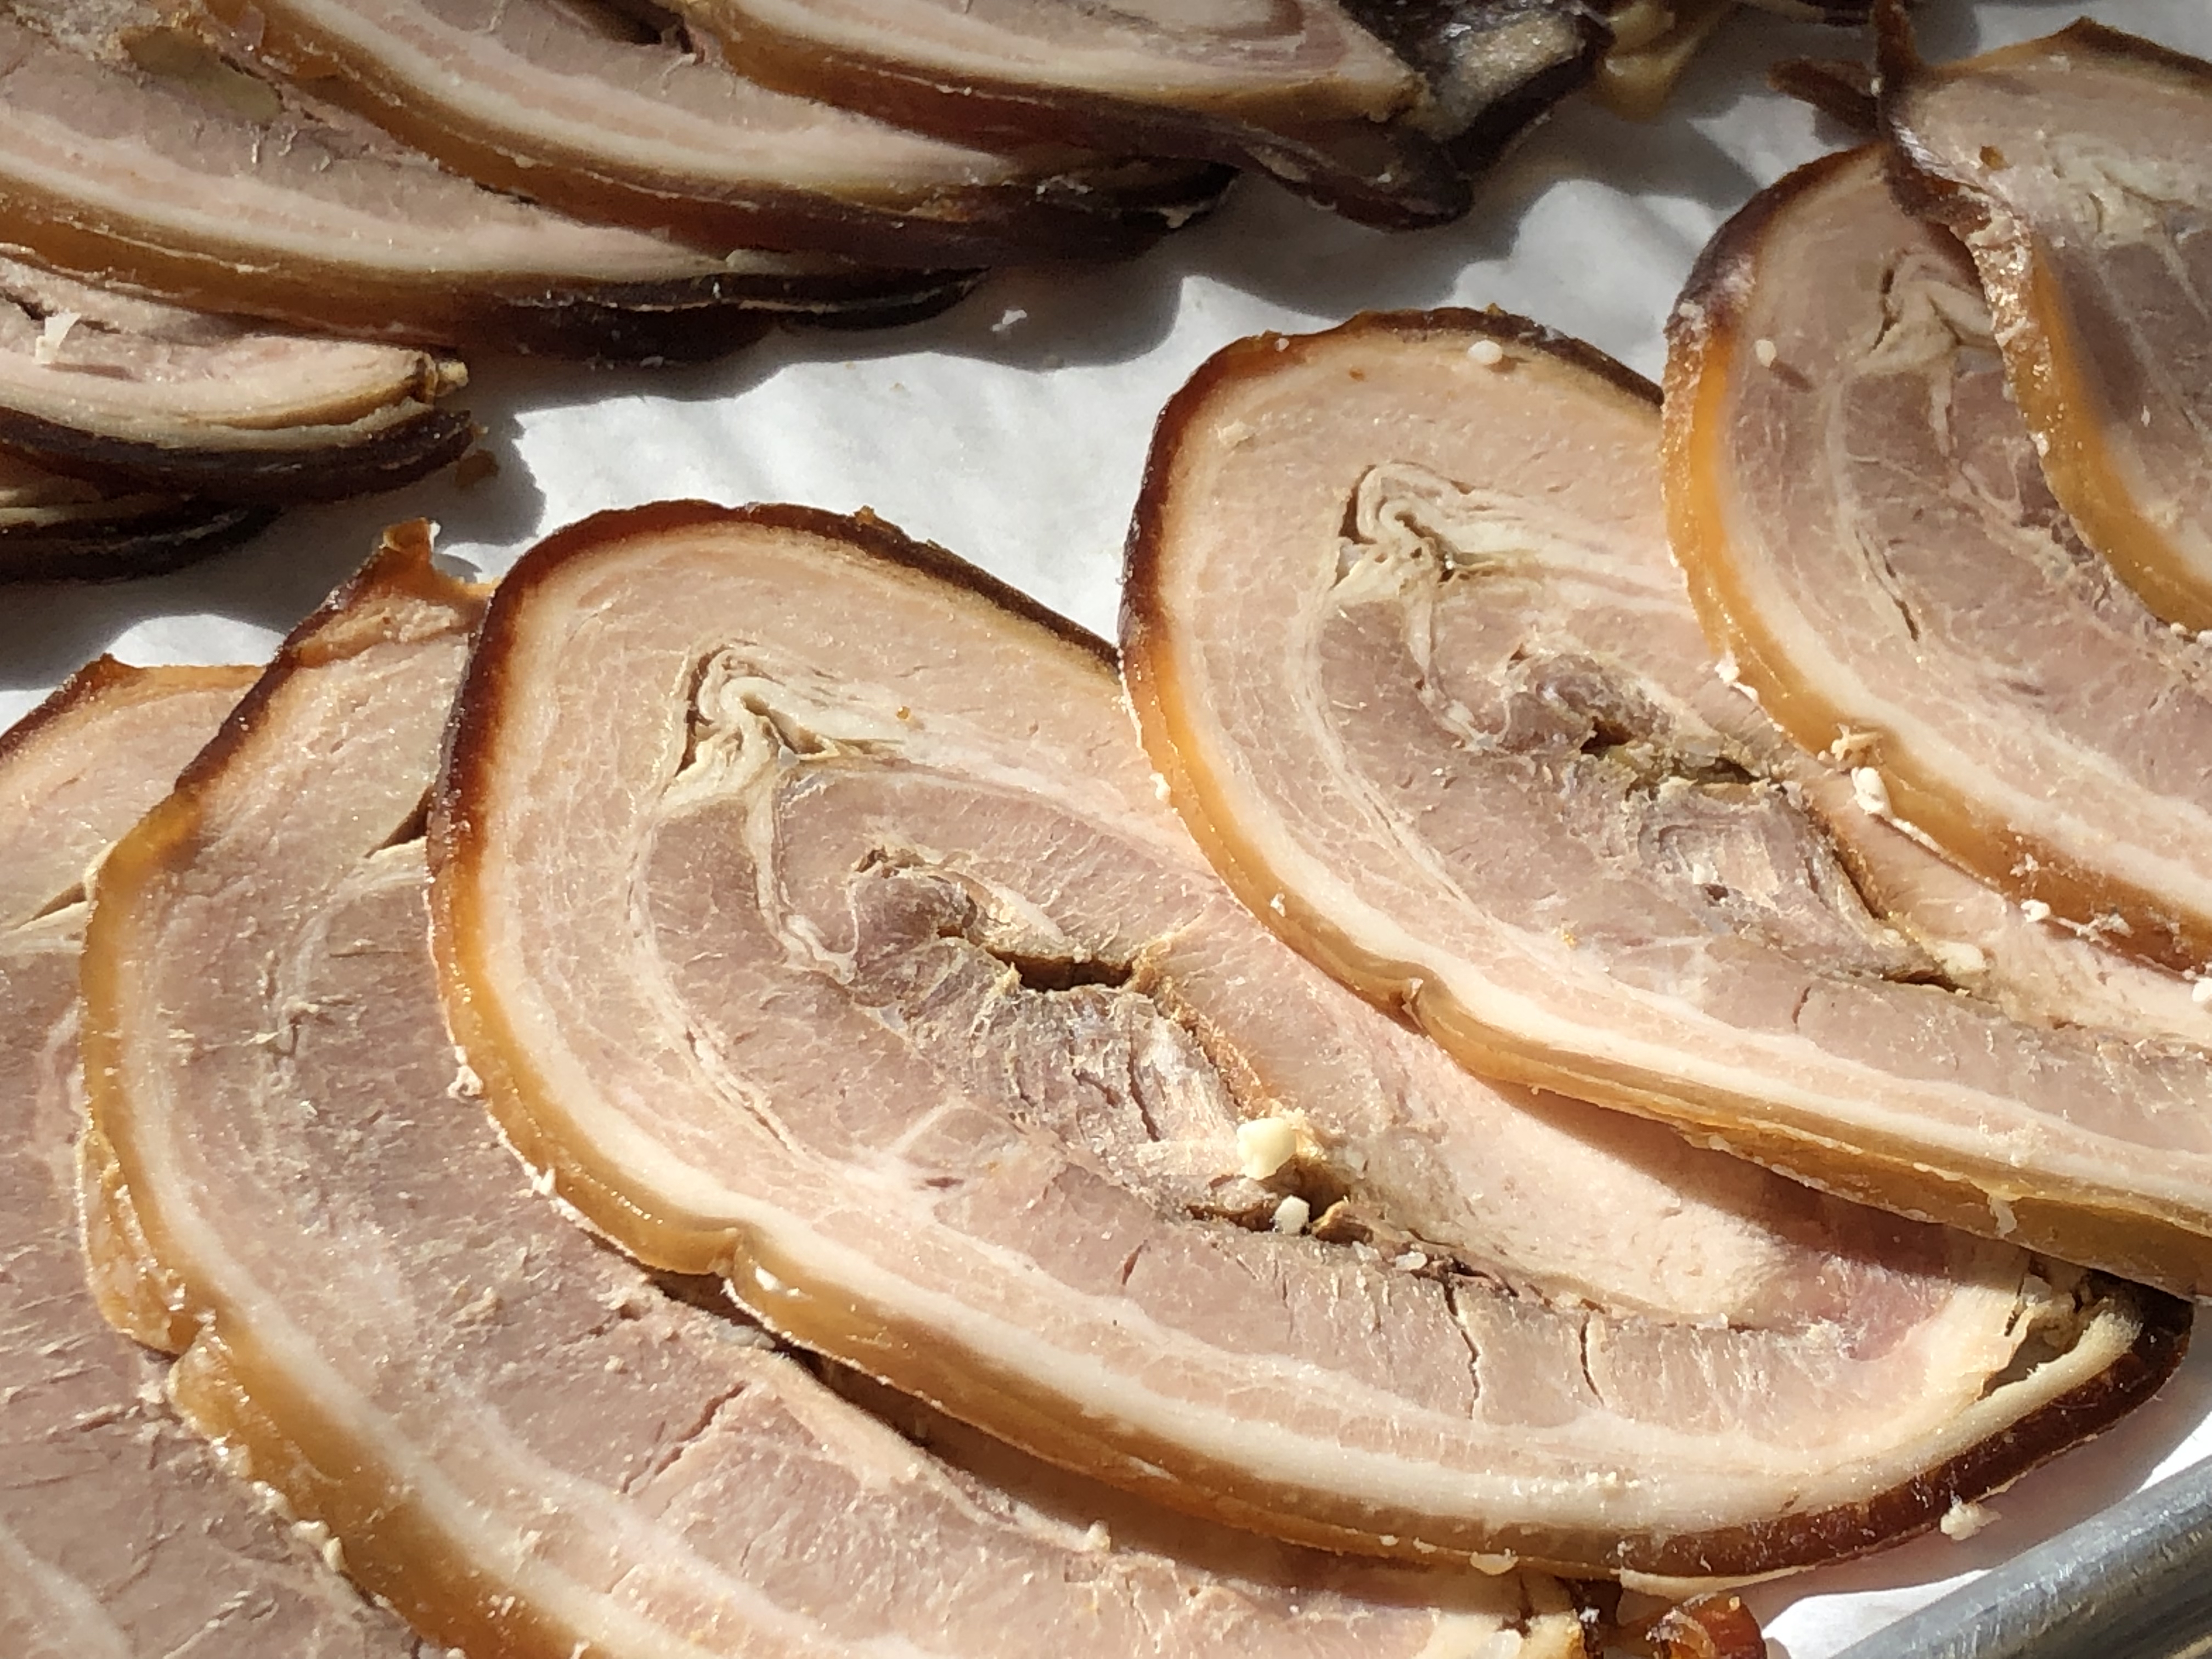 Slices of brown chashu pork